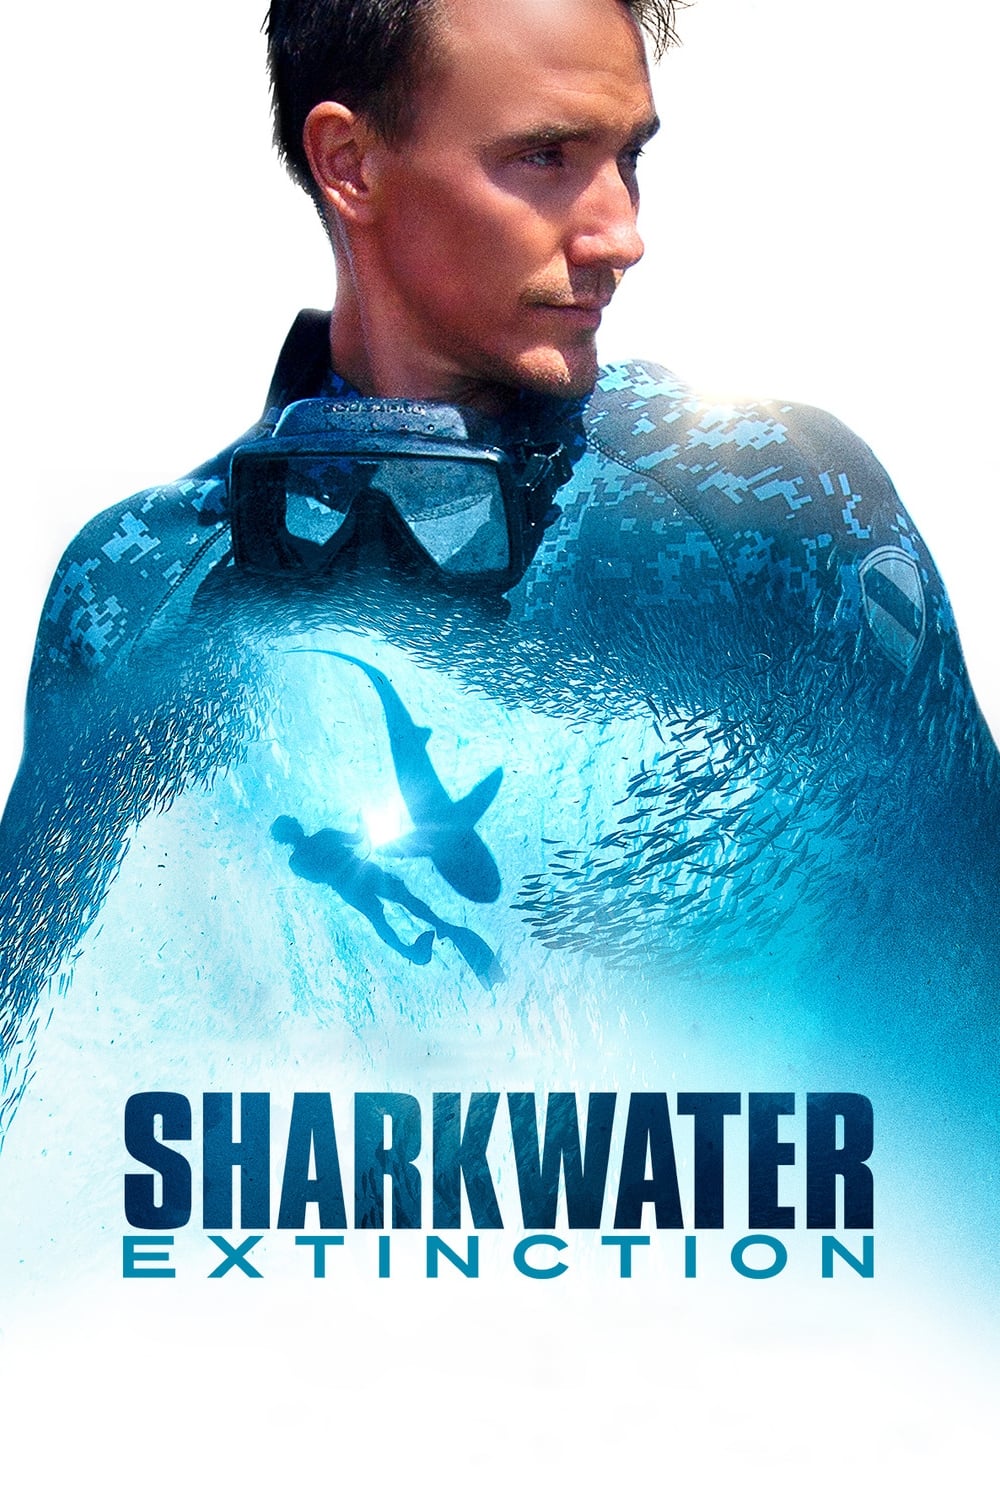 Affiche du film Sharkwater extinction 168325